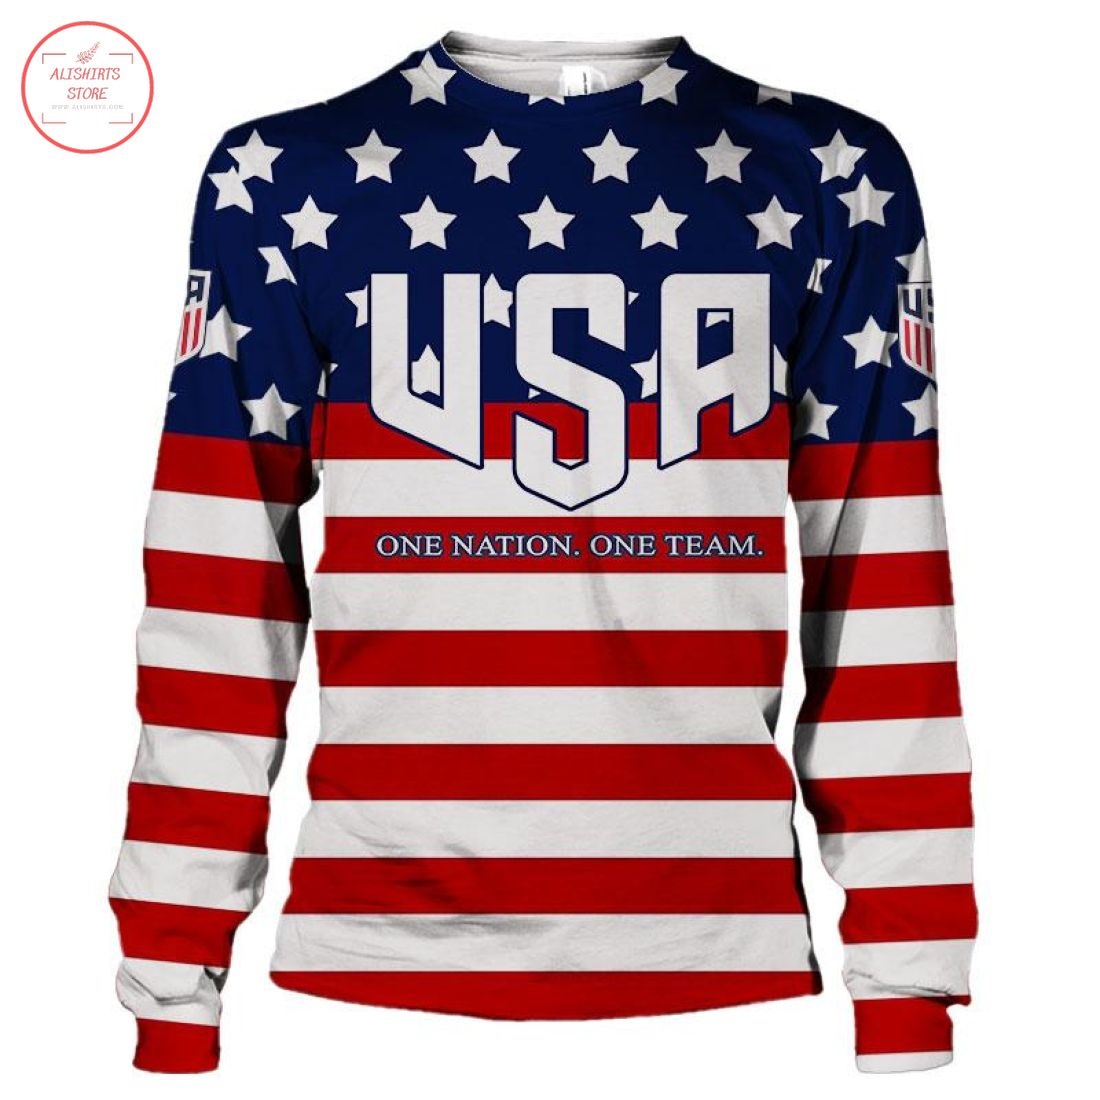 USA One Nation One Team Shirt